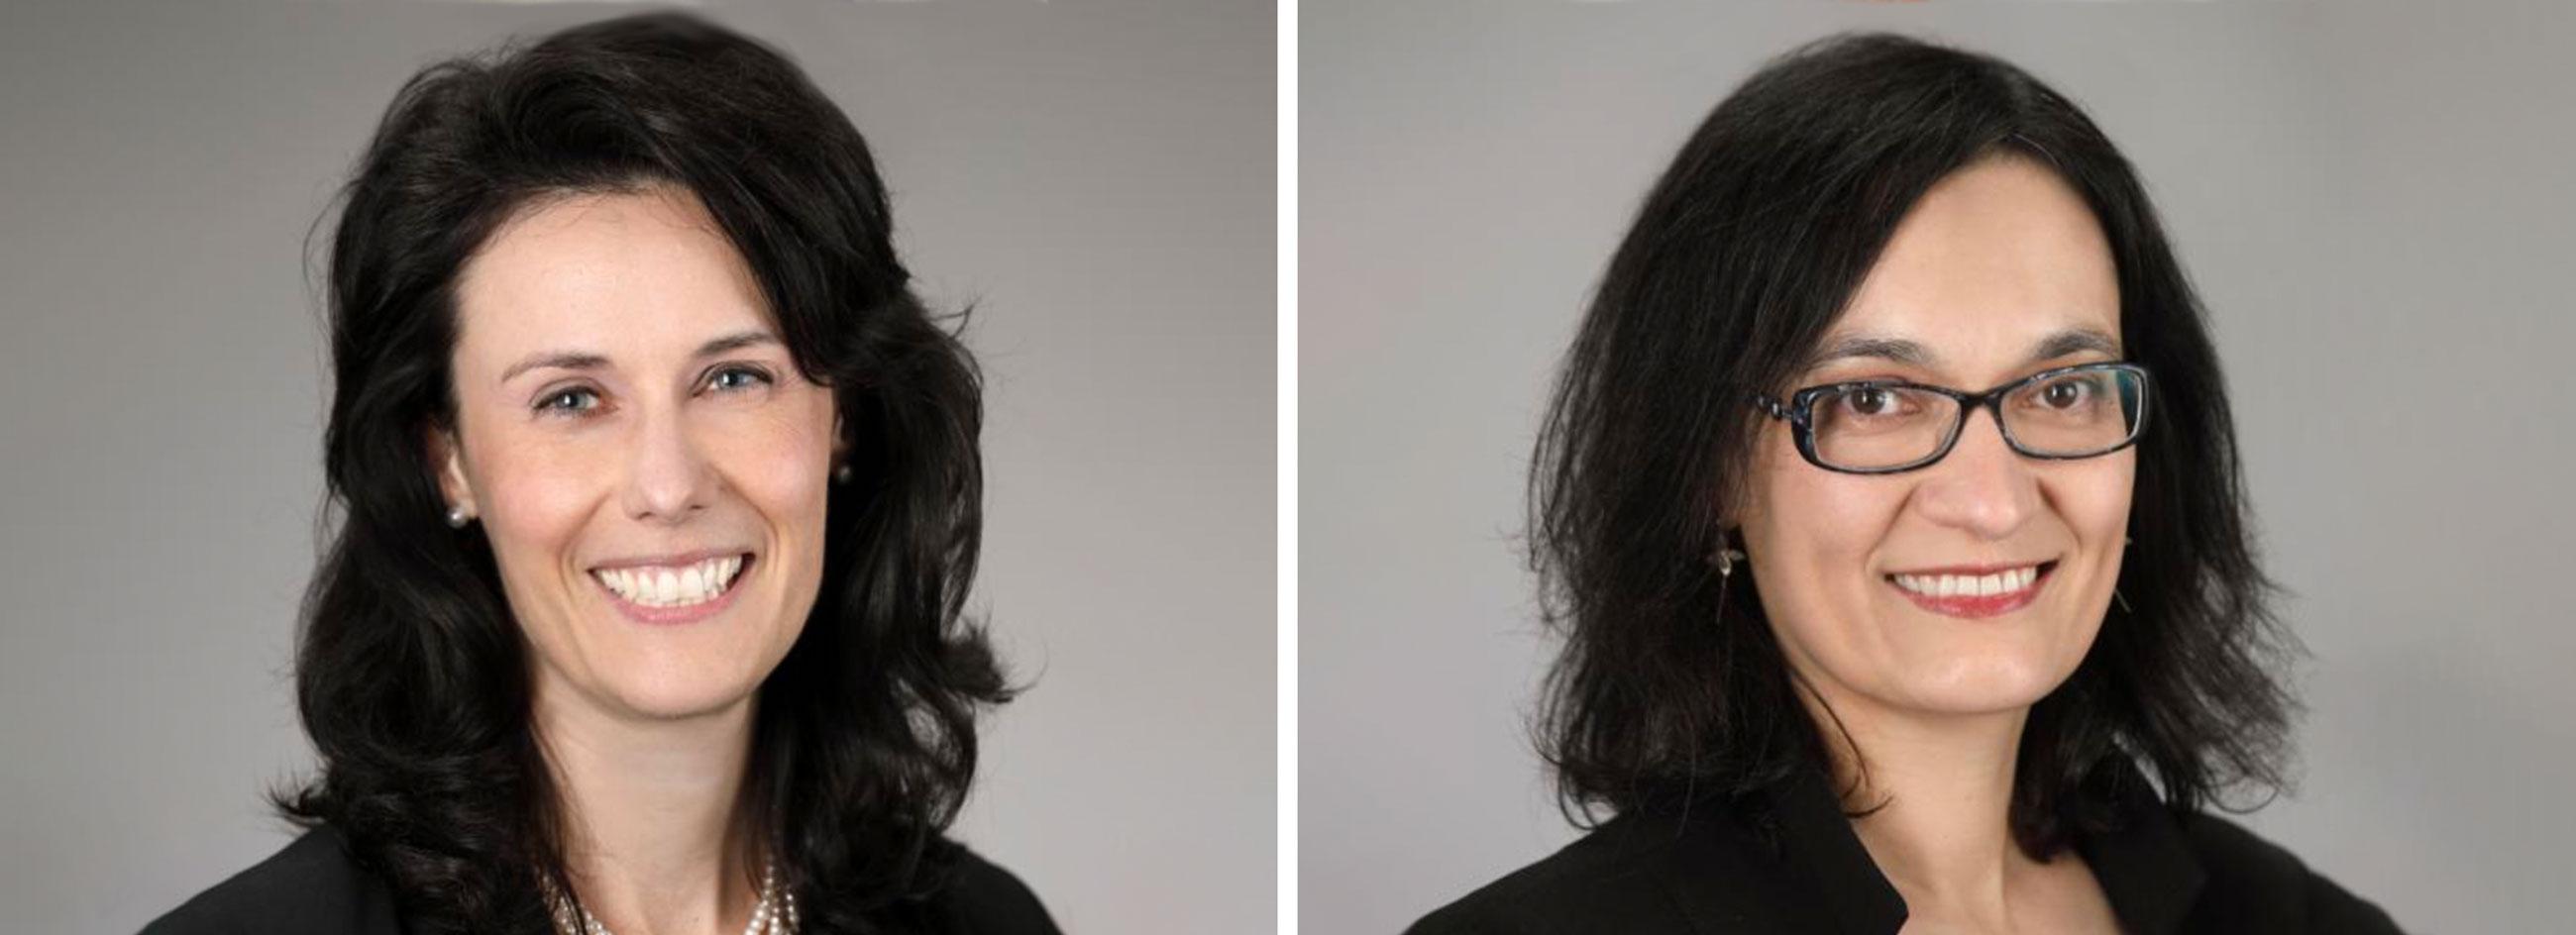 Headshot of Dr. Heather Leeper and headshot of Dr. Marta Penas-Prado